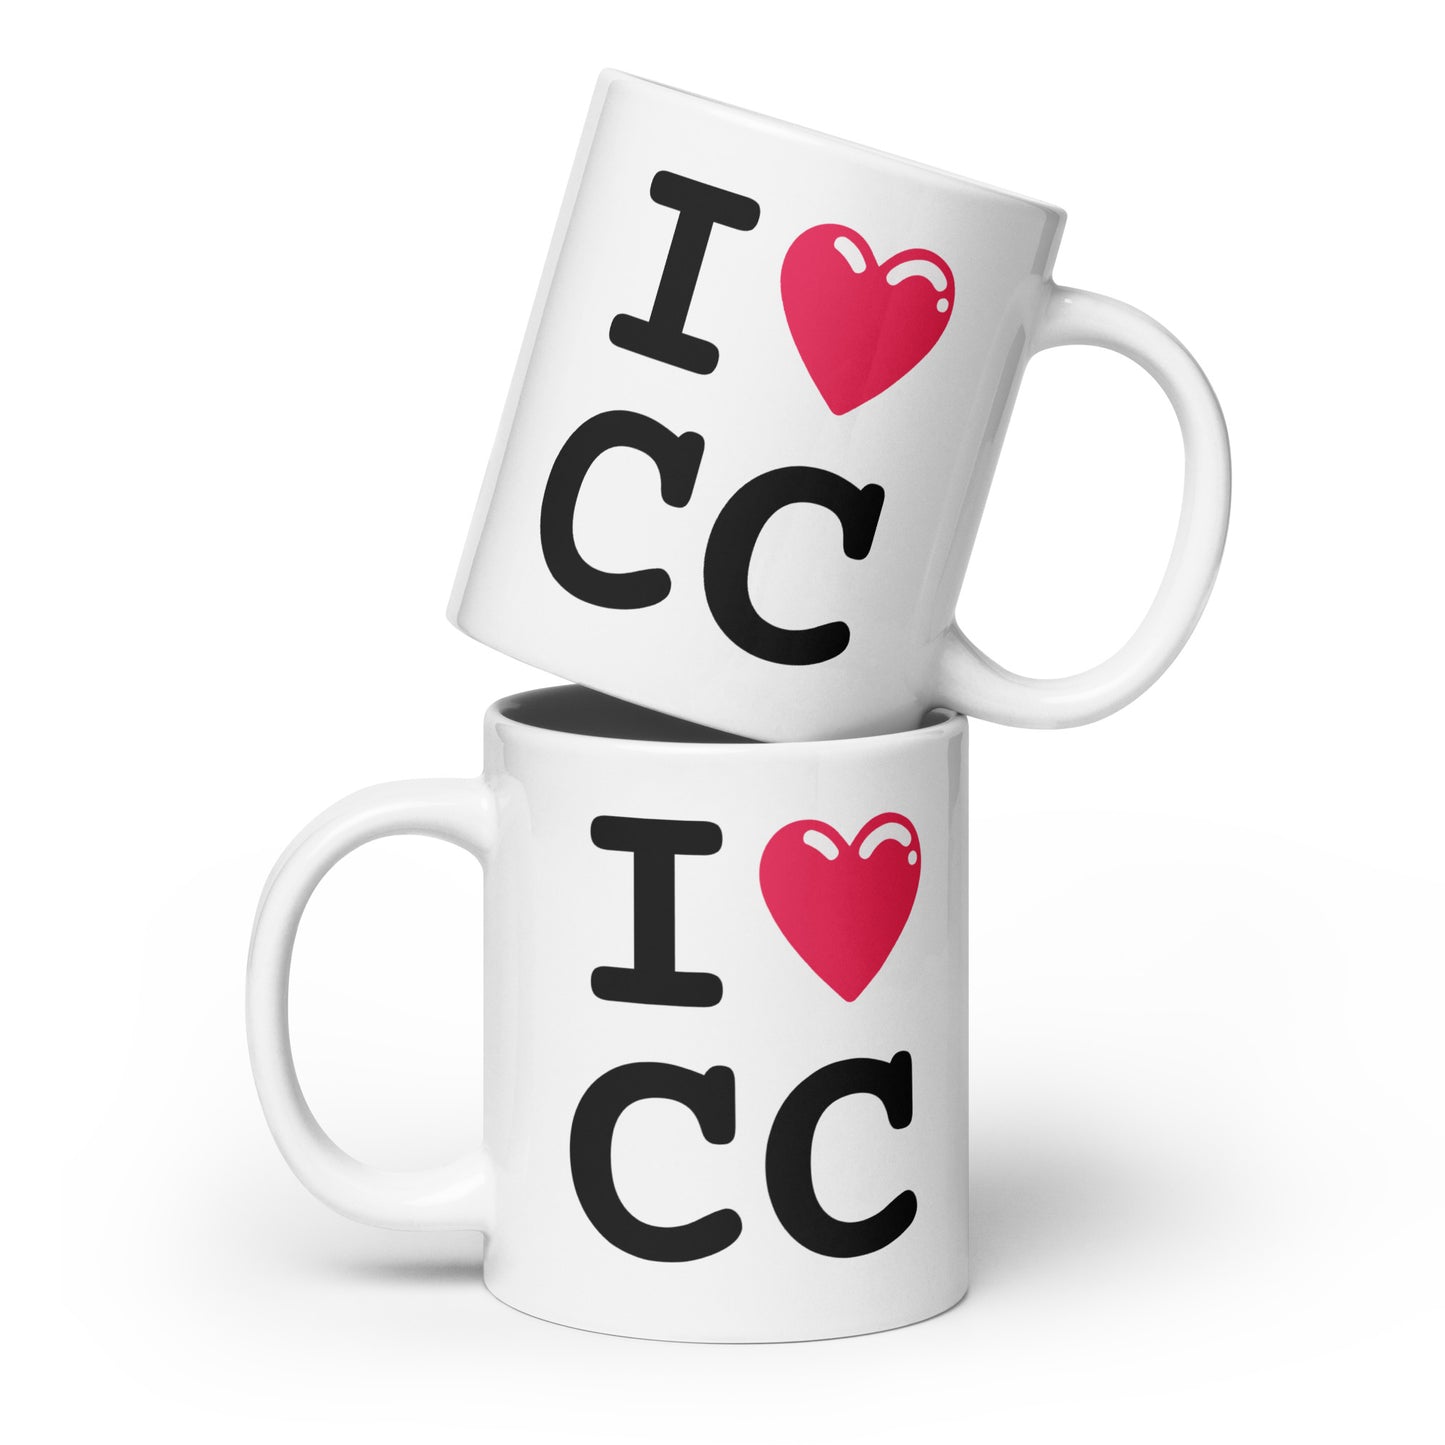 Crowd Control™ - Glossy Mug - I Heart CC